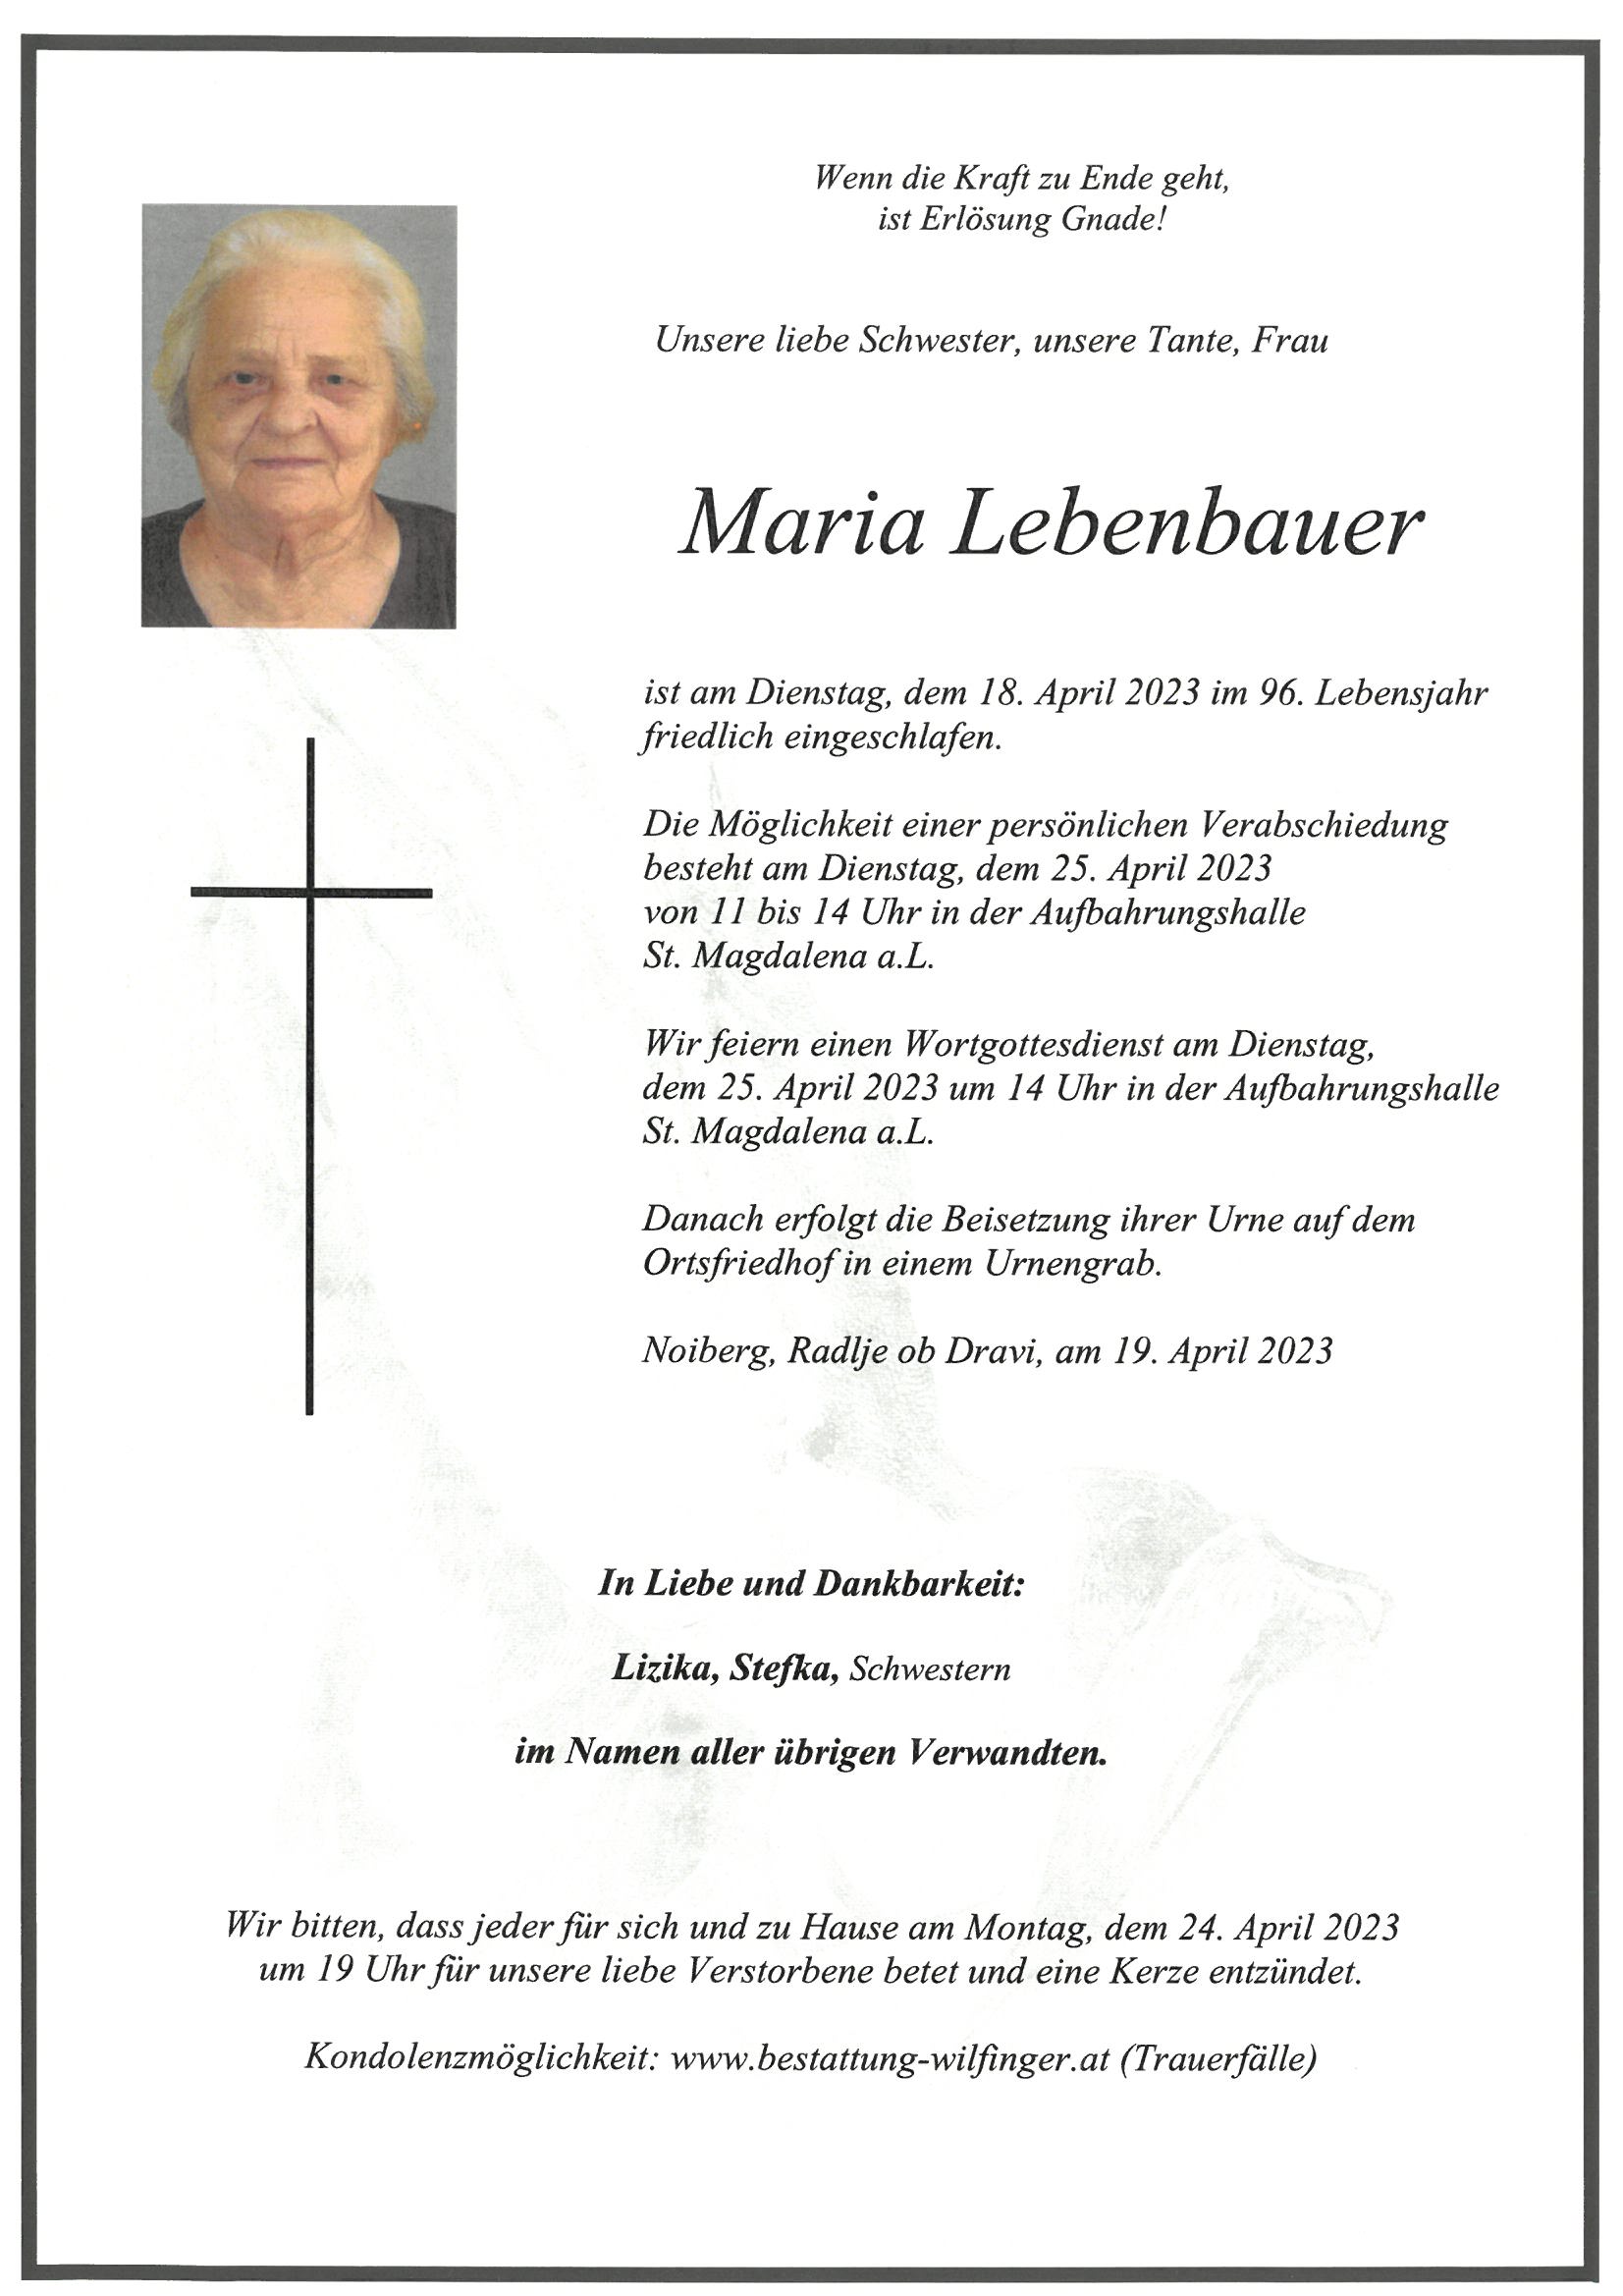 Maria Lebenbauer, Noiberg